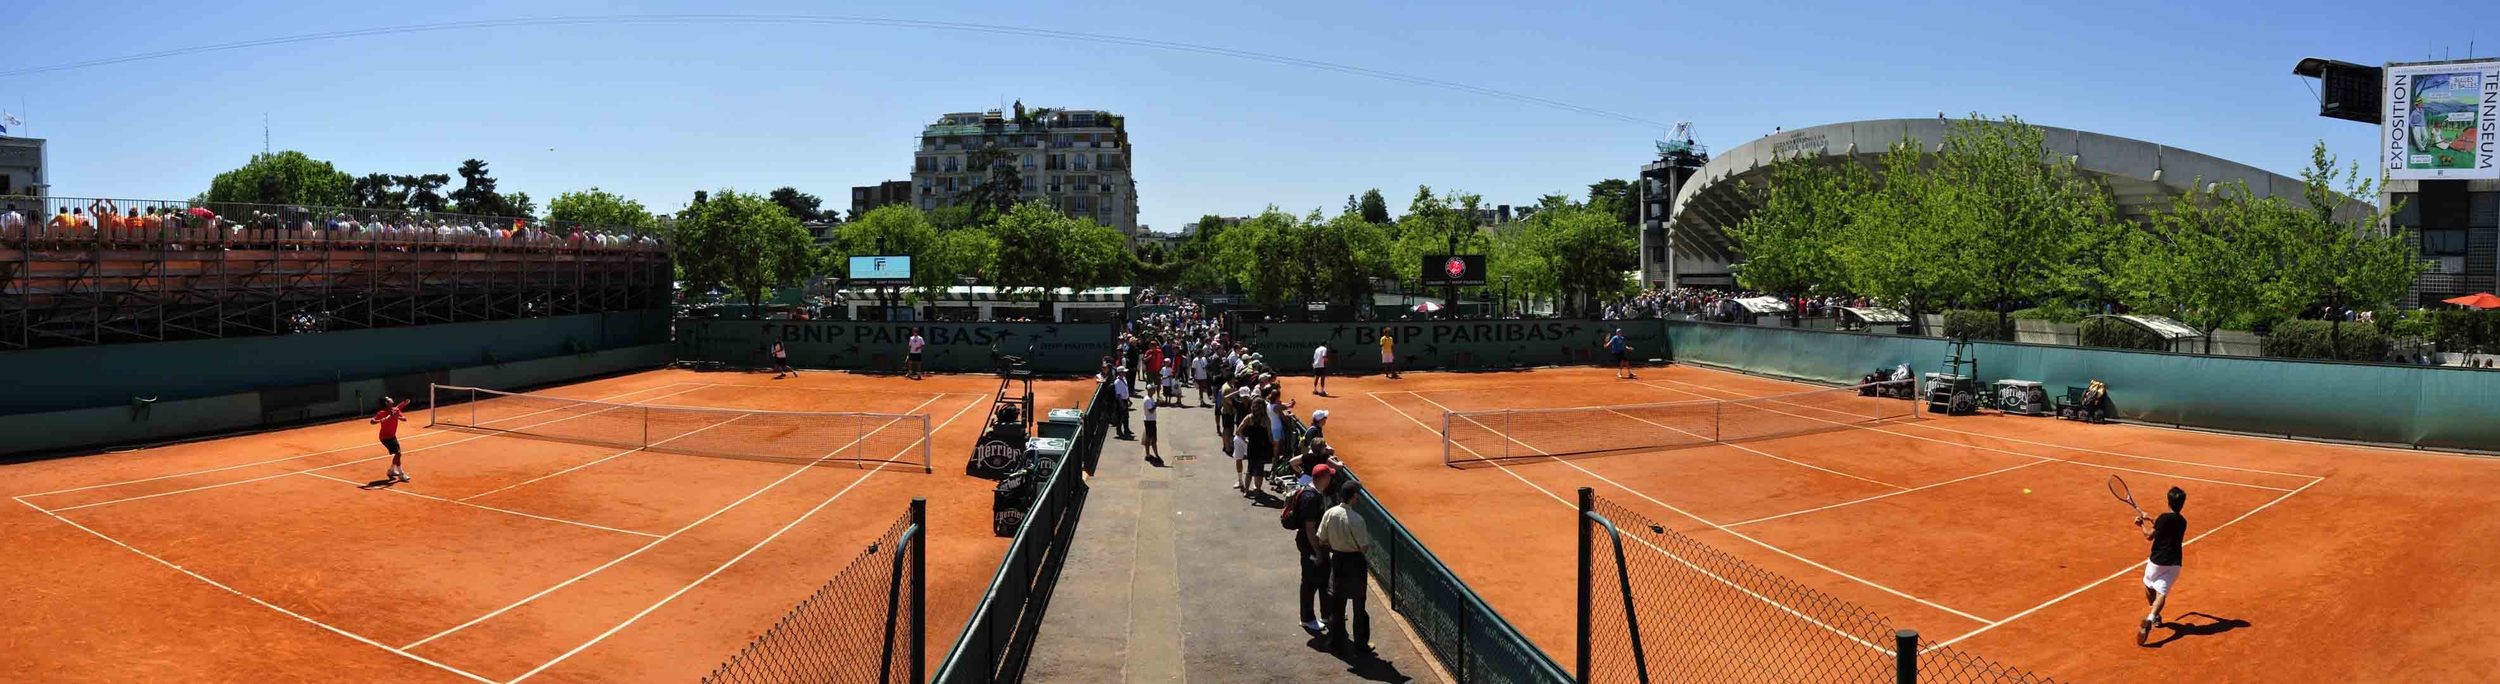 Panorama tennis paris france Roland Garros cours d'entrainements training course players terre battue.jpg